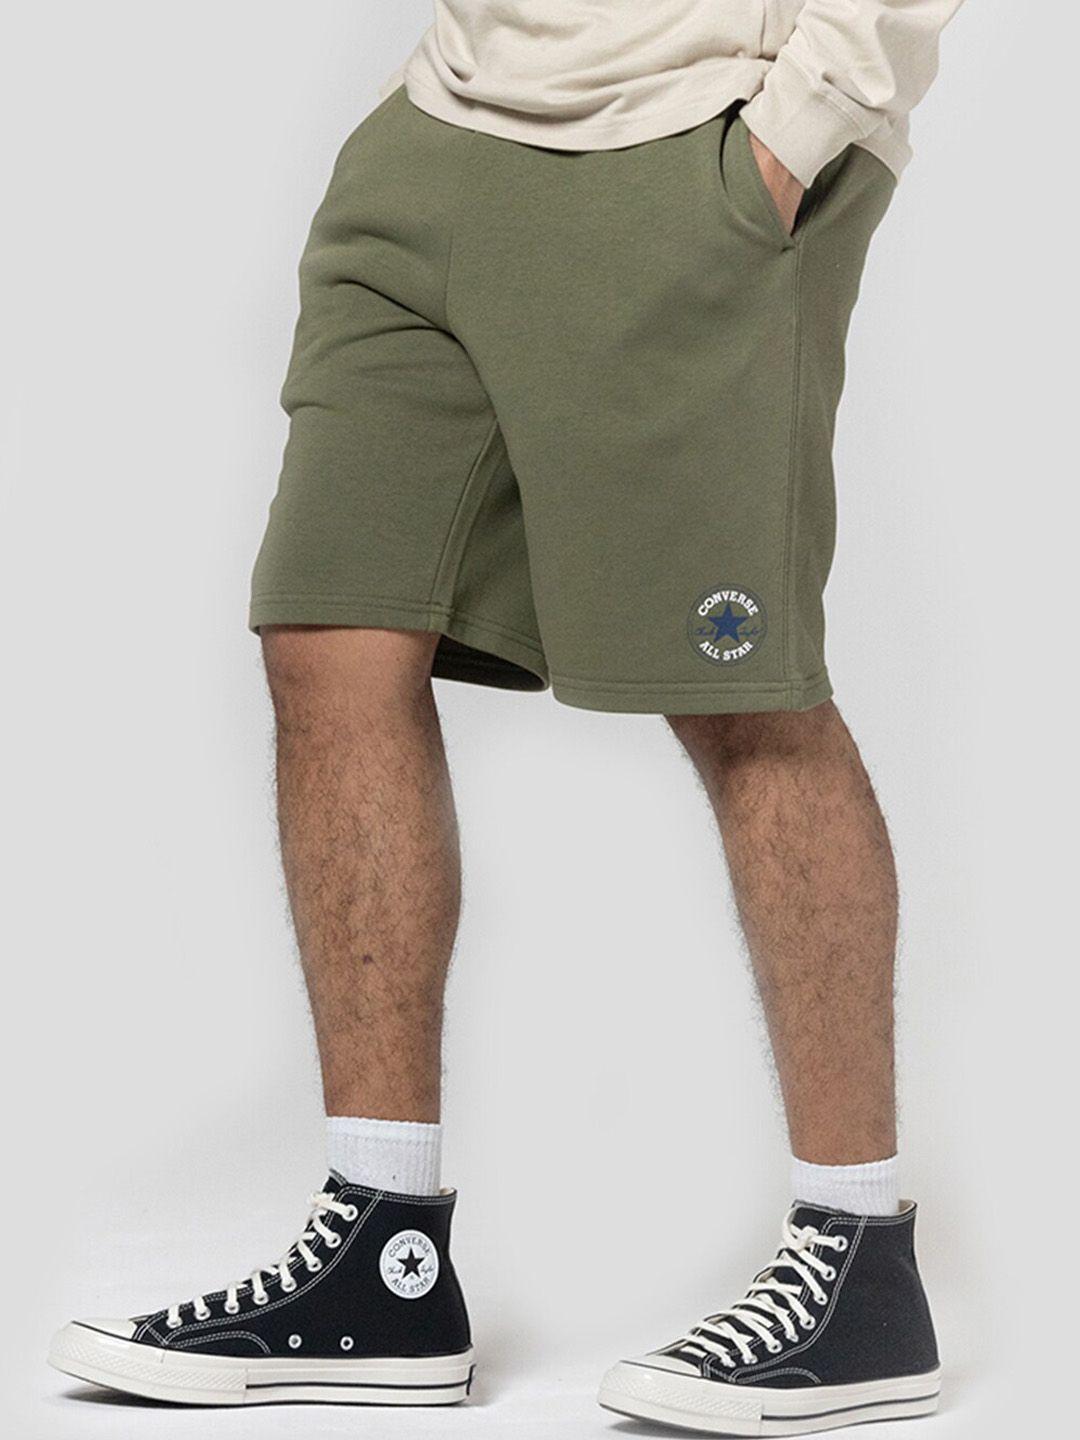 converse unisex novelty chuck patch pure cotton shorts